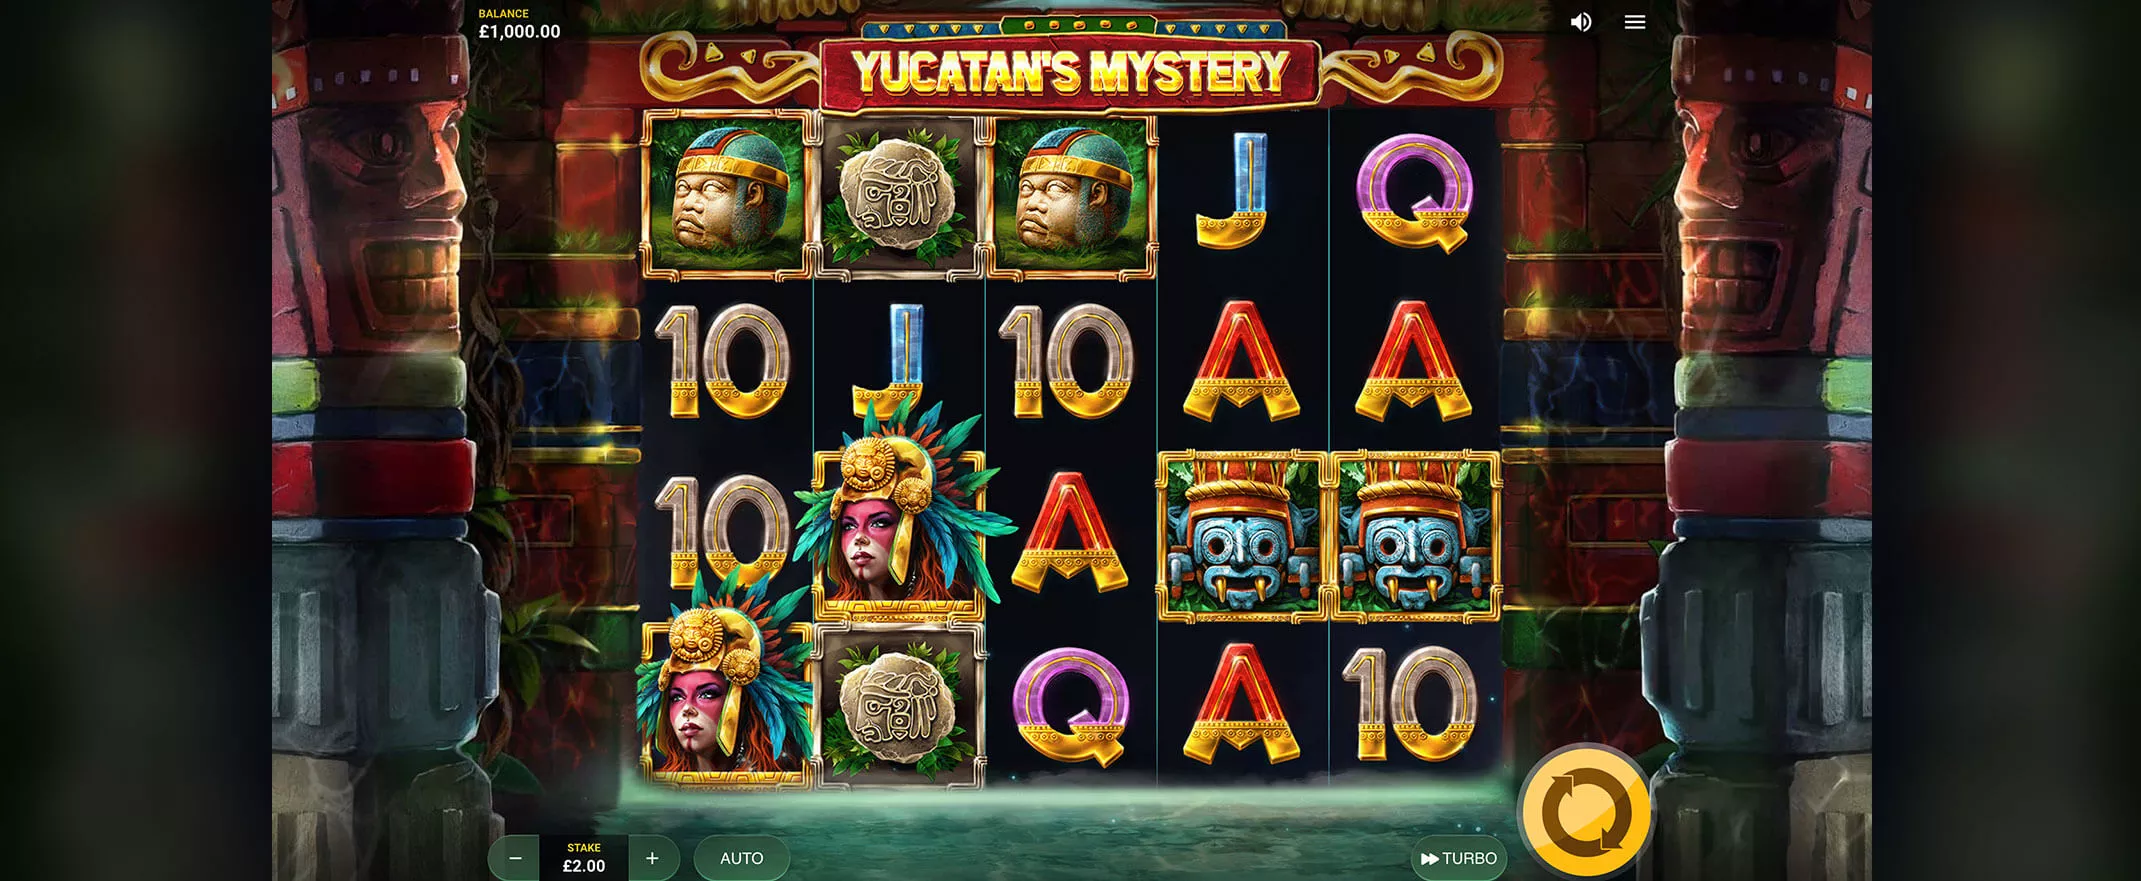 Yucatan's Mystery slot screenshot of the reels